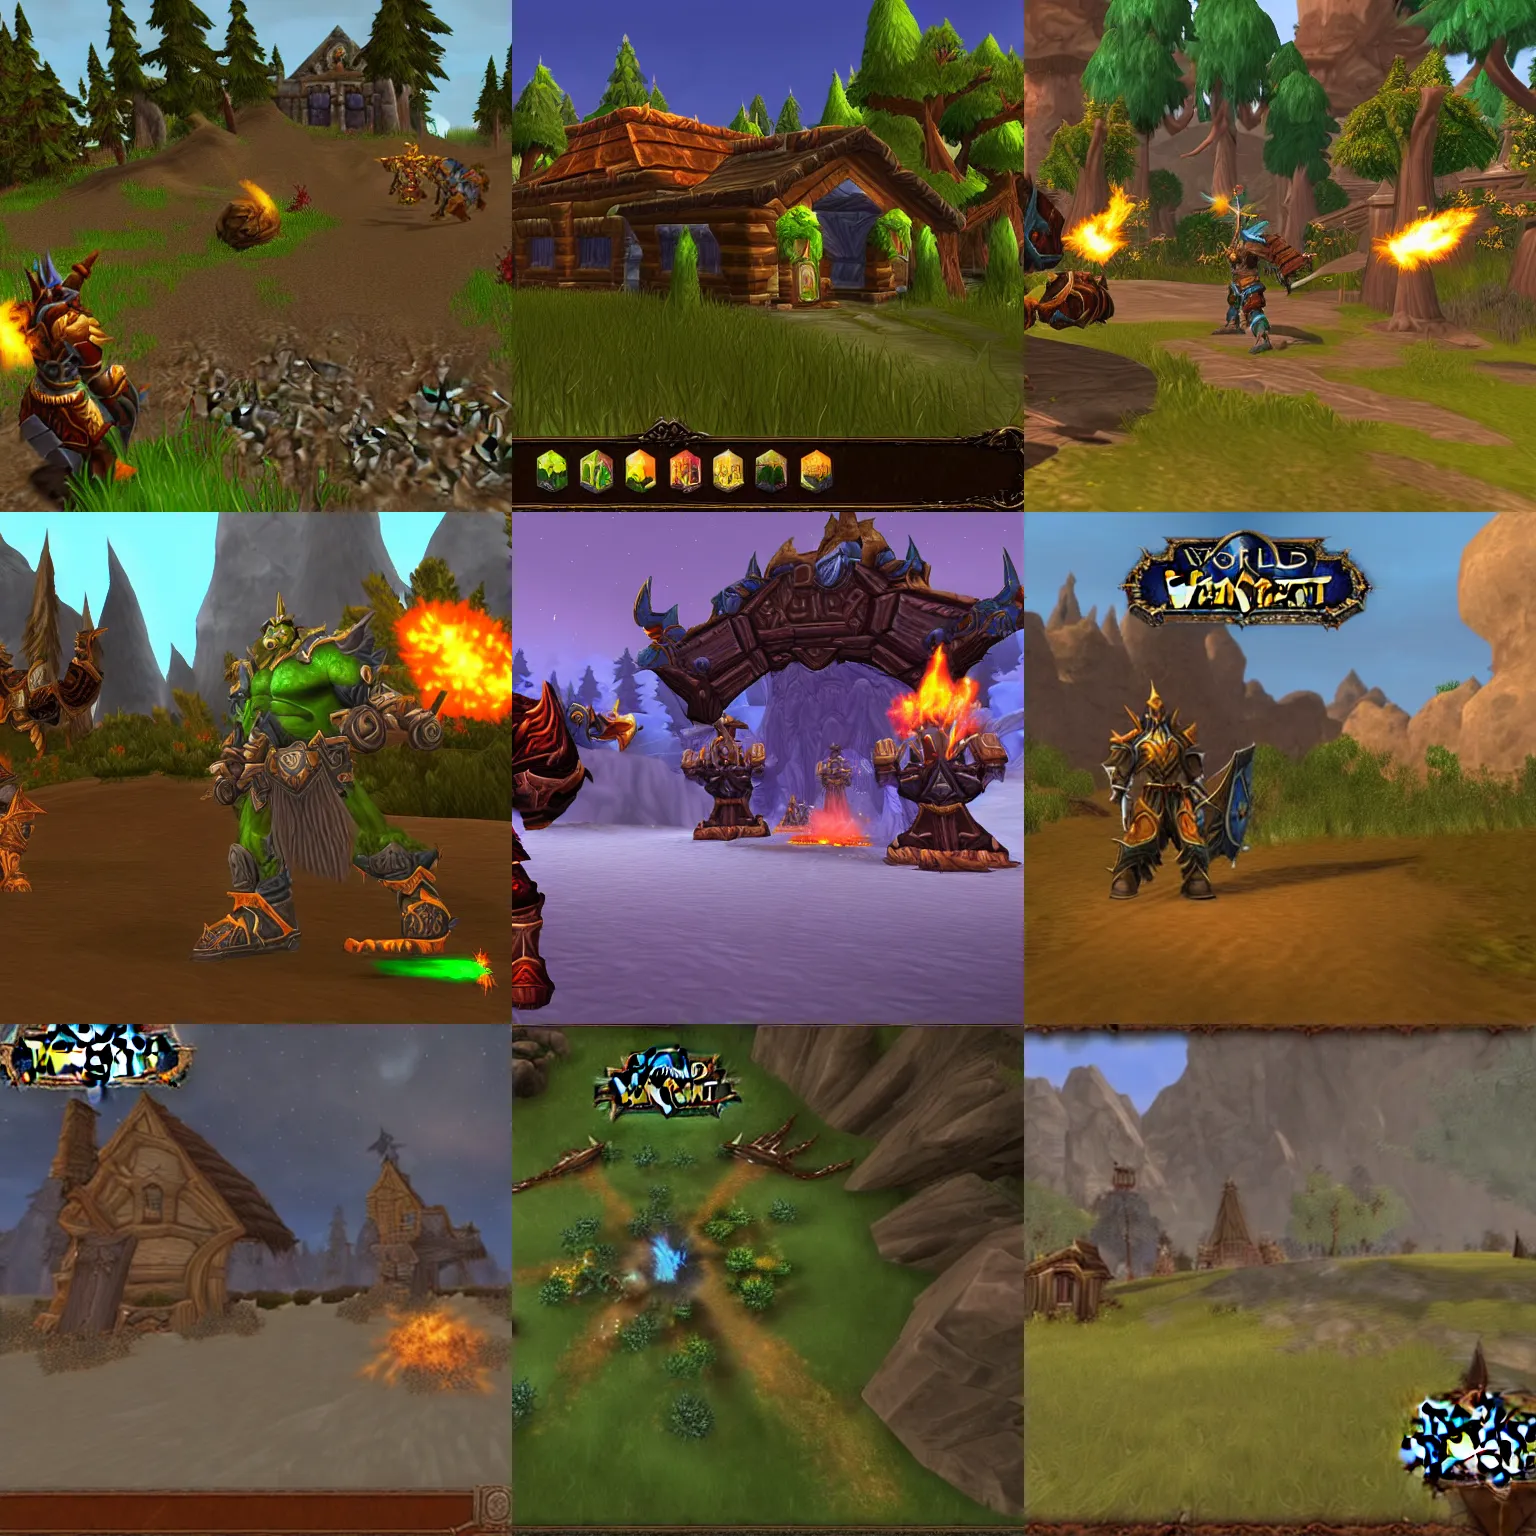 Prompt: World of Warcraft Screenshot, 2005